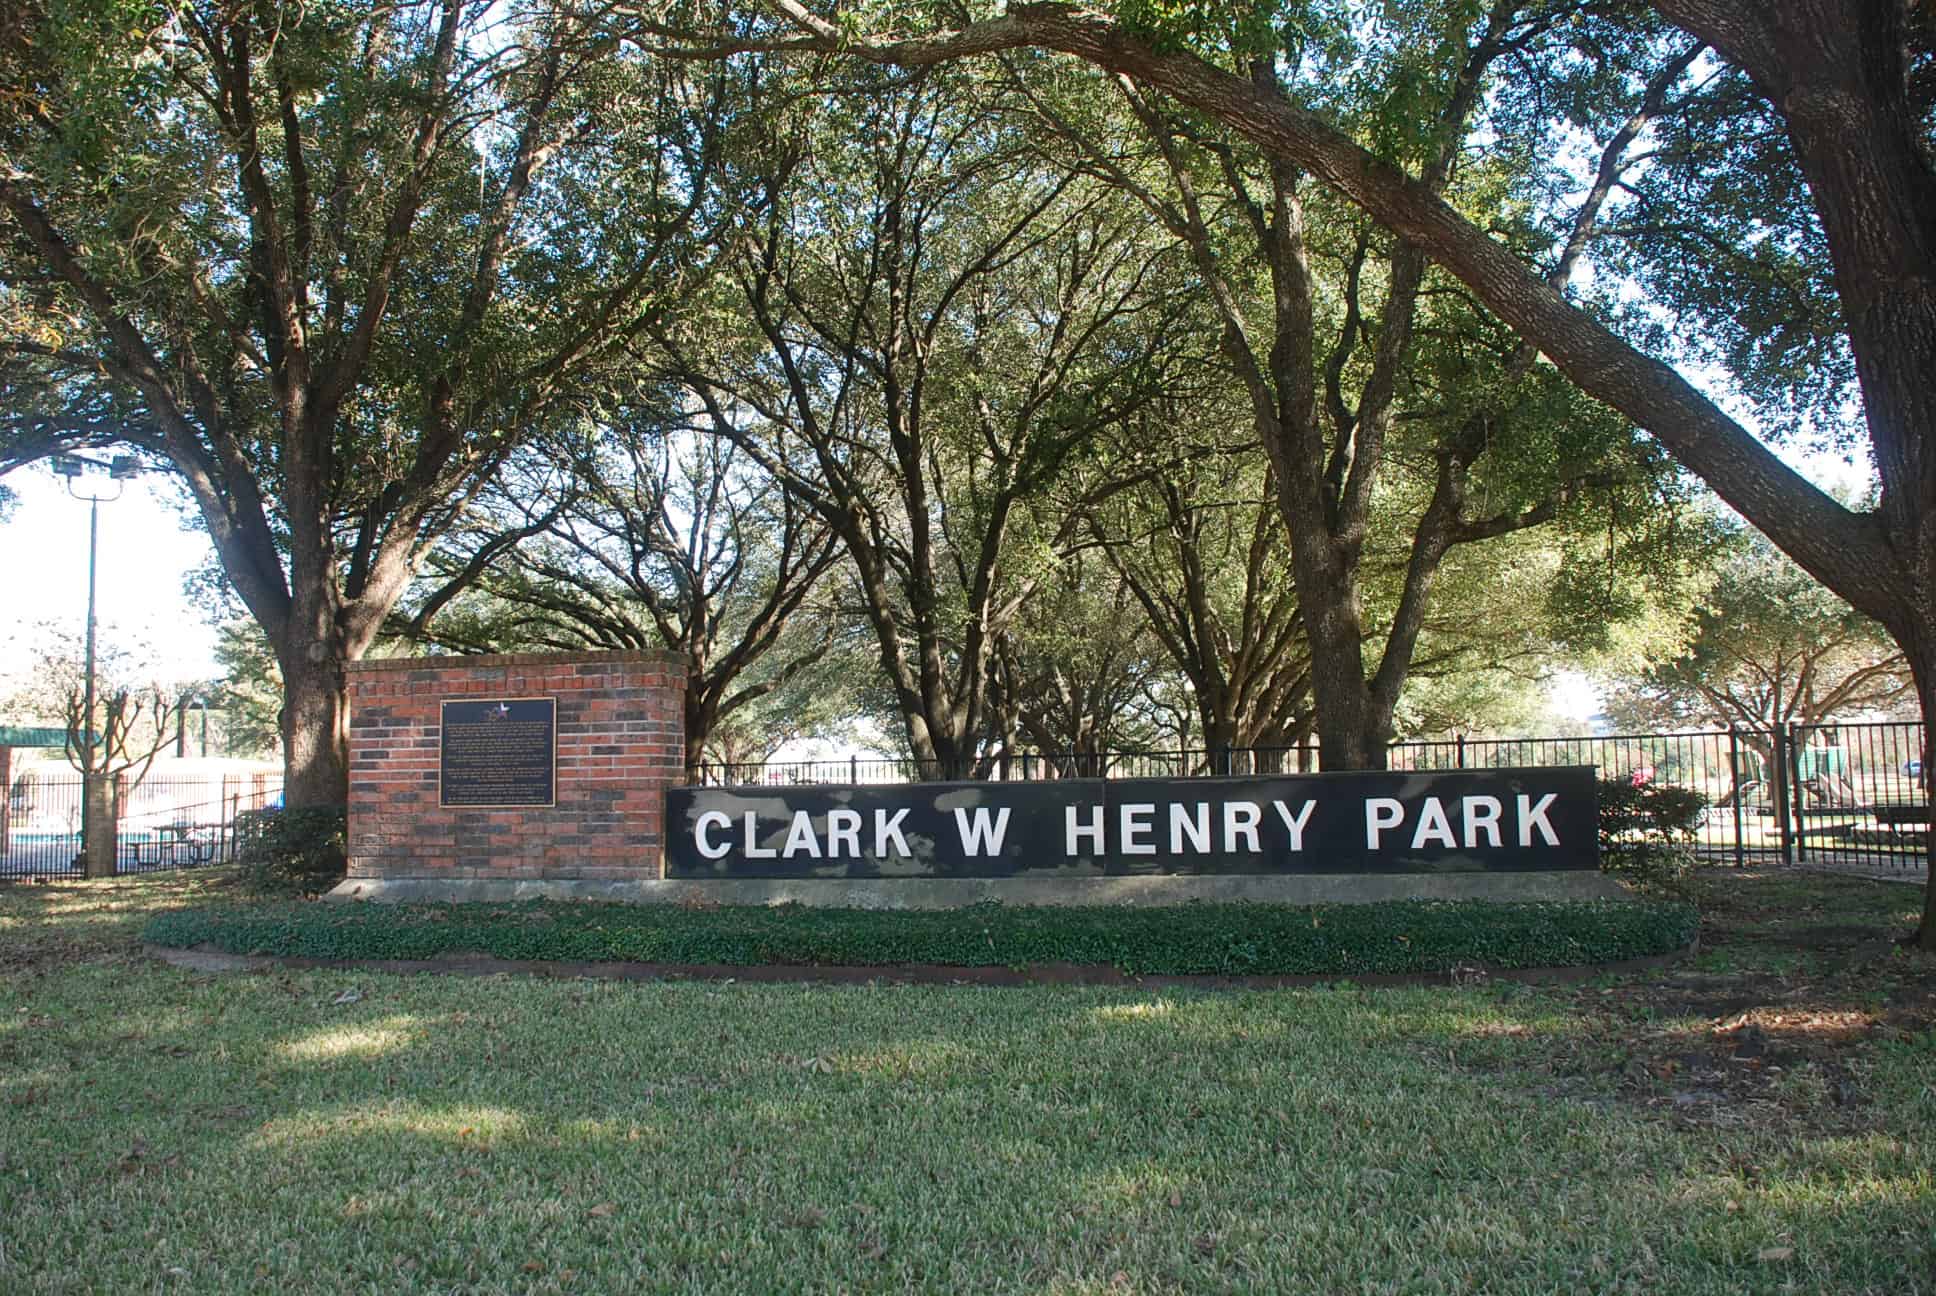 Clark W Henry Park Sign